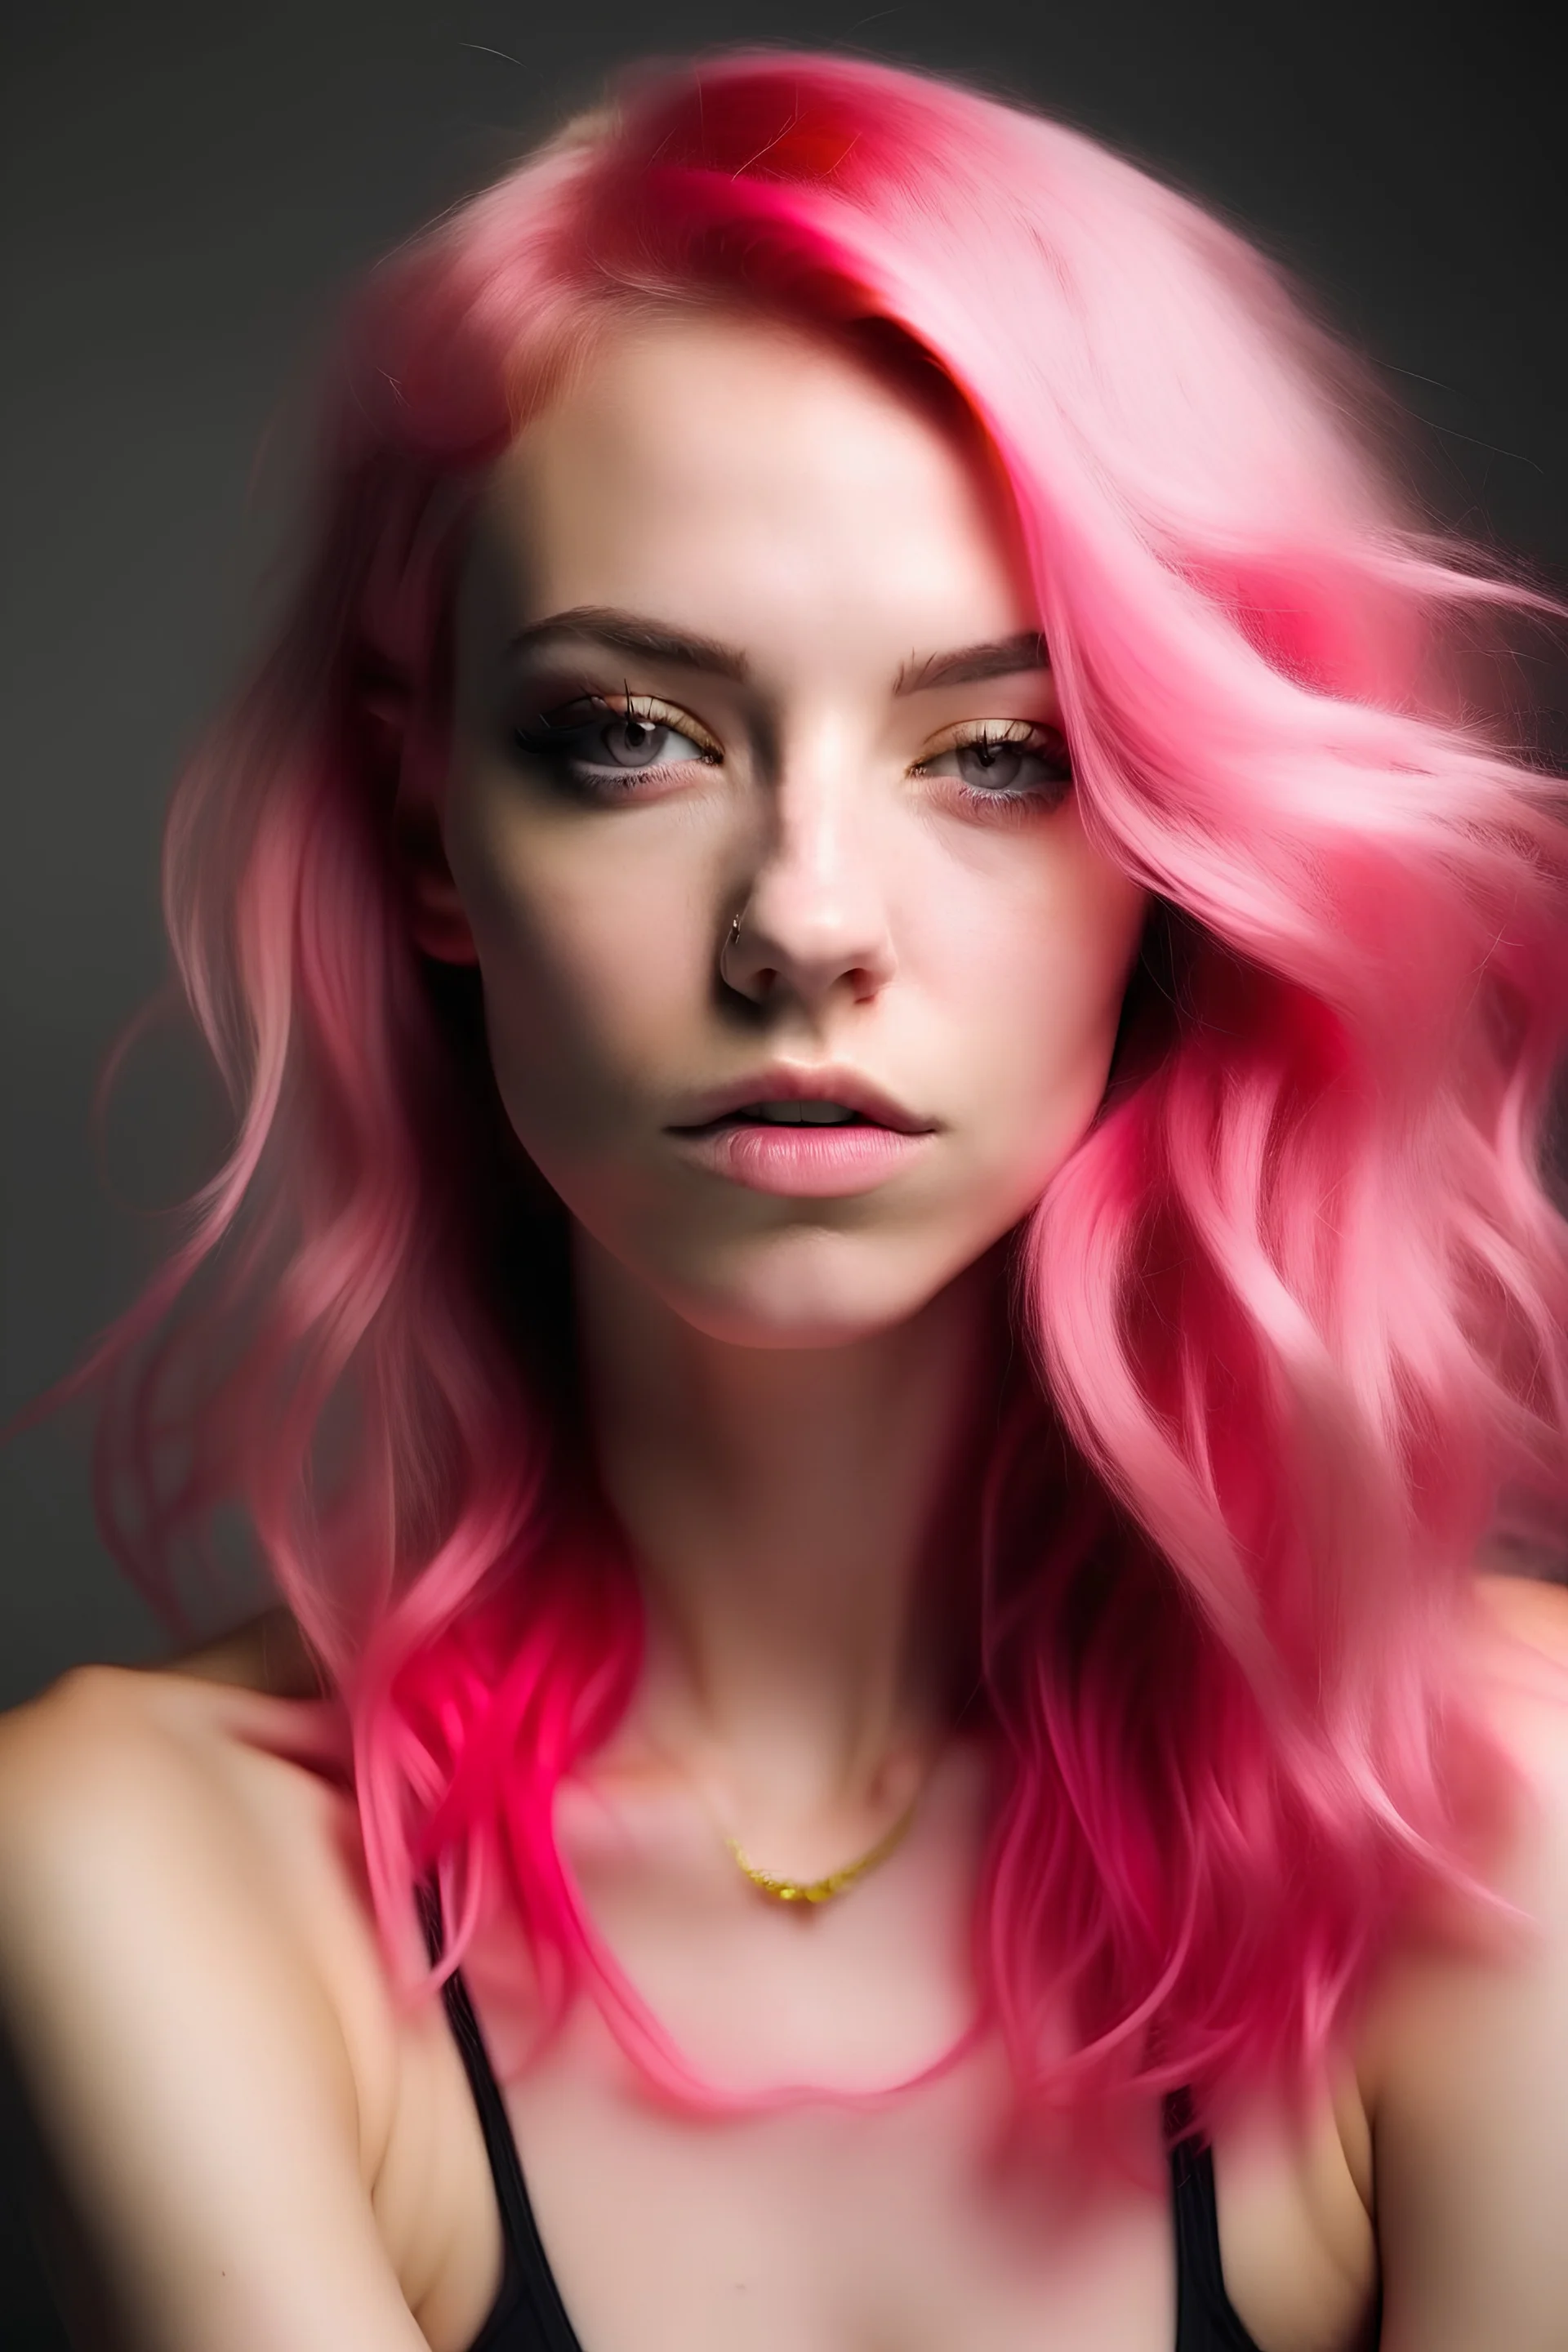 Hot female godess. Pink hair